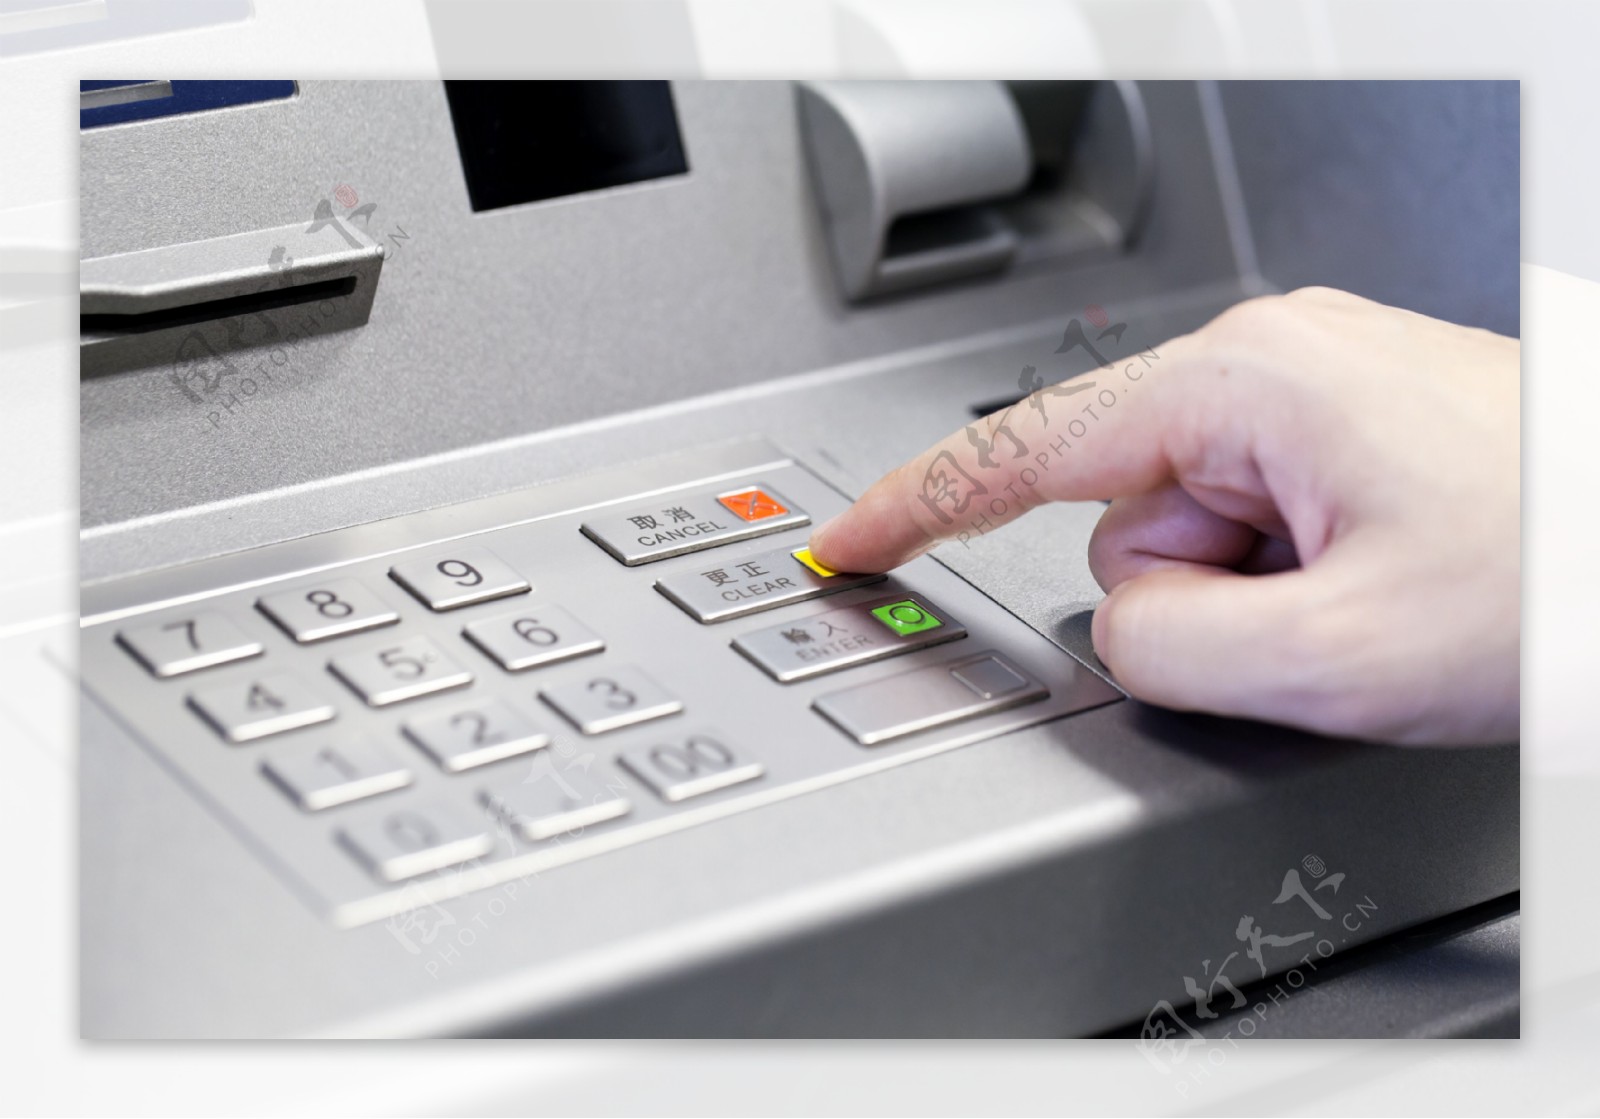 ATM取款机按键图片